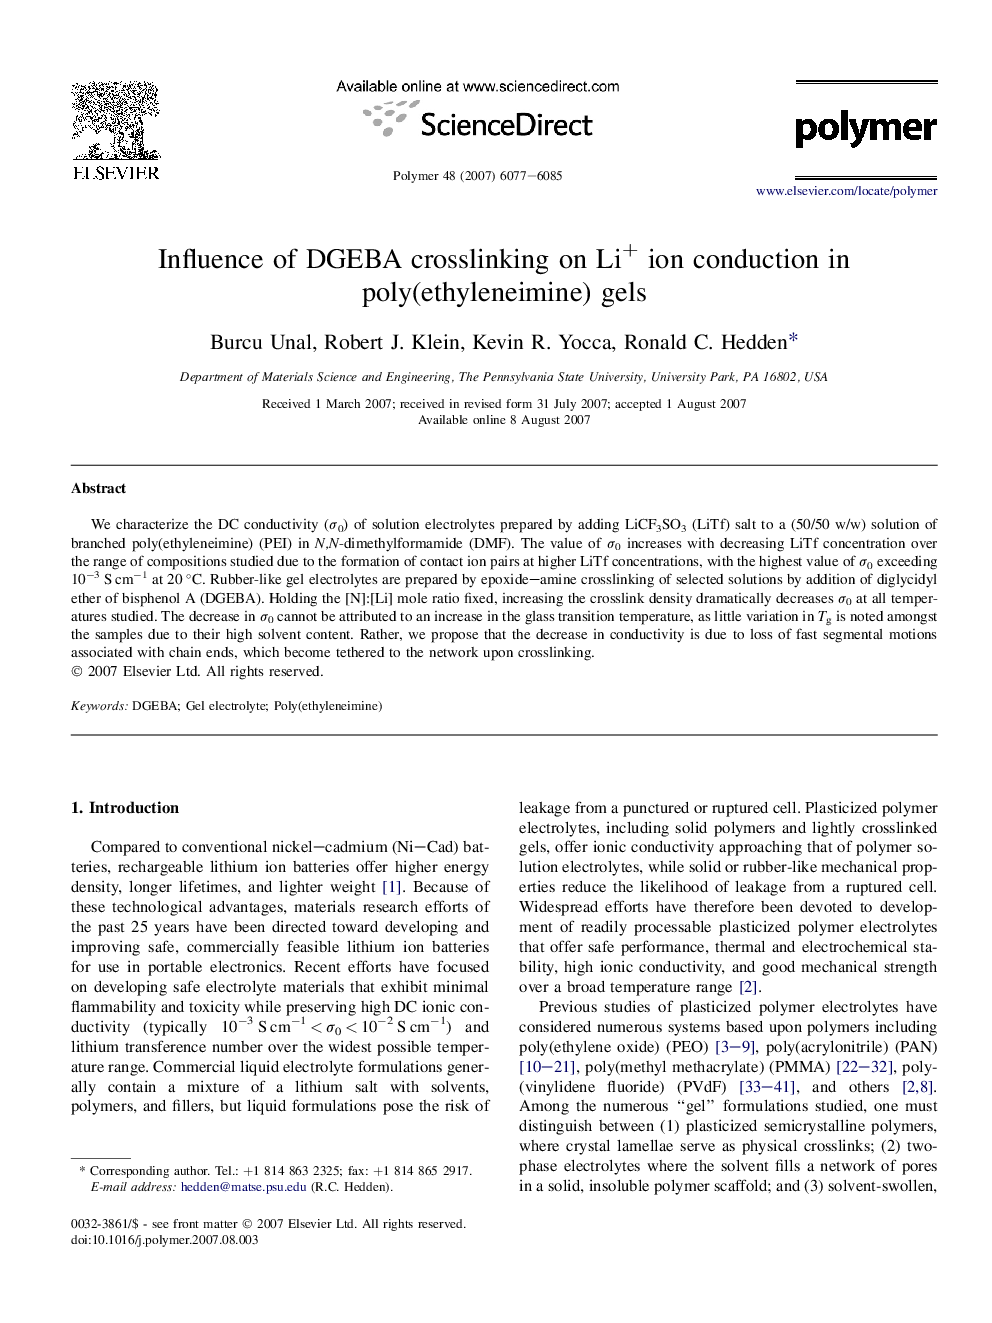 Influence of DGEBA crosslinking on Li+ ion conduction in poly(ethyleneimine) gels